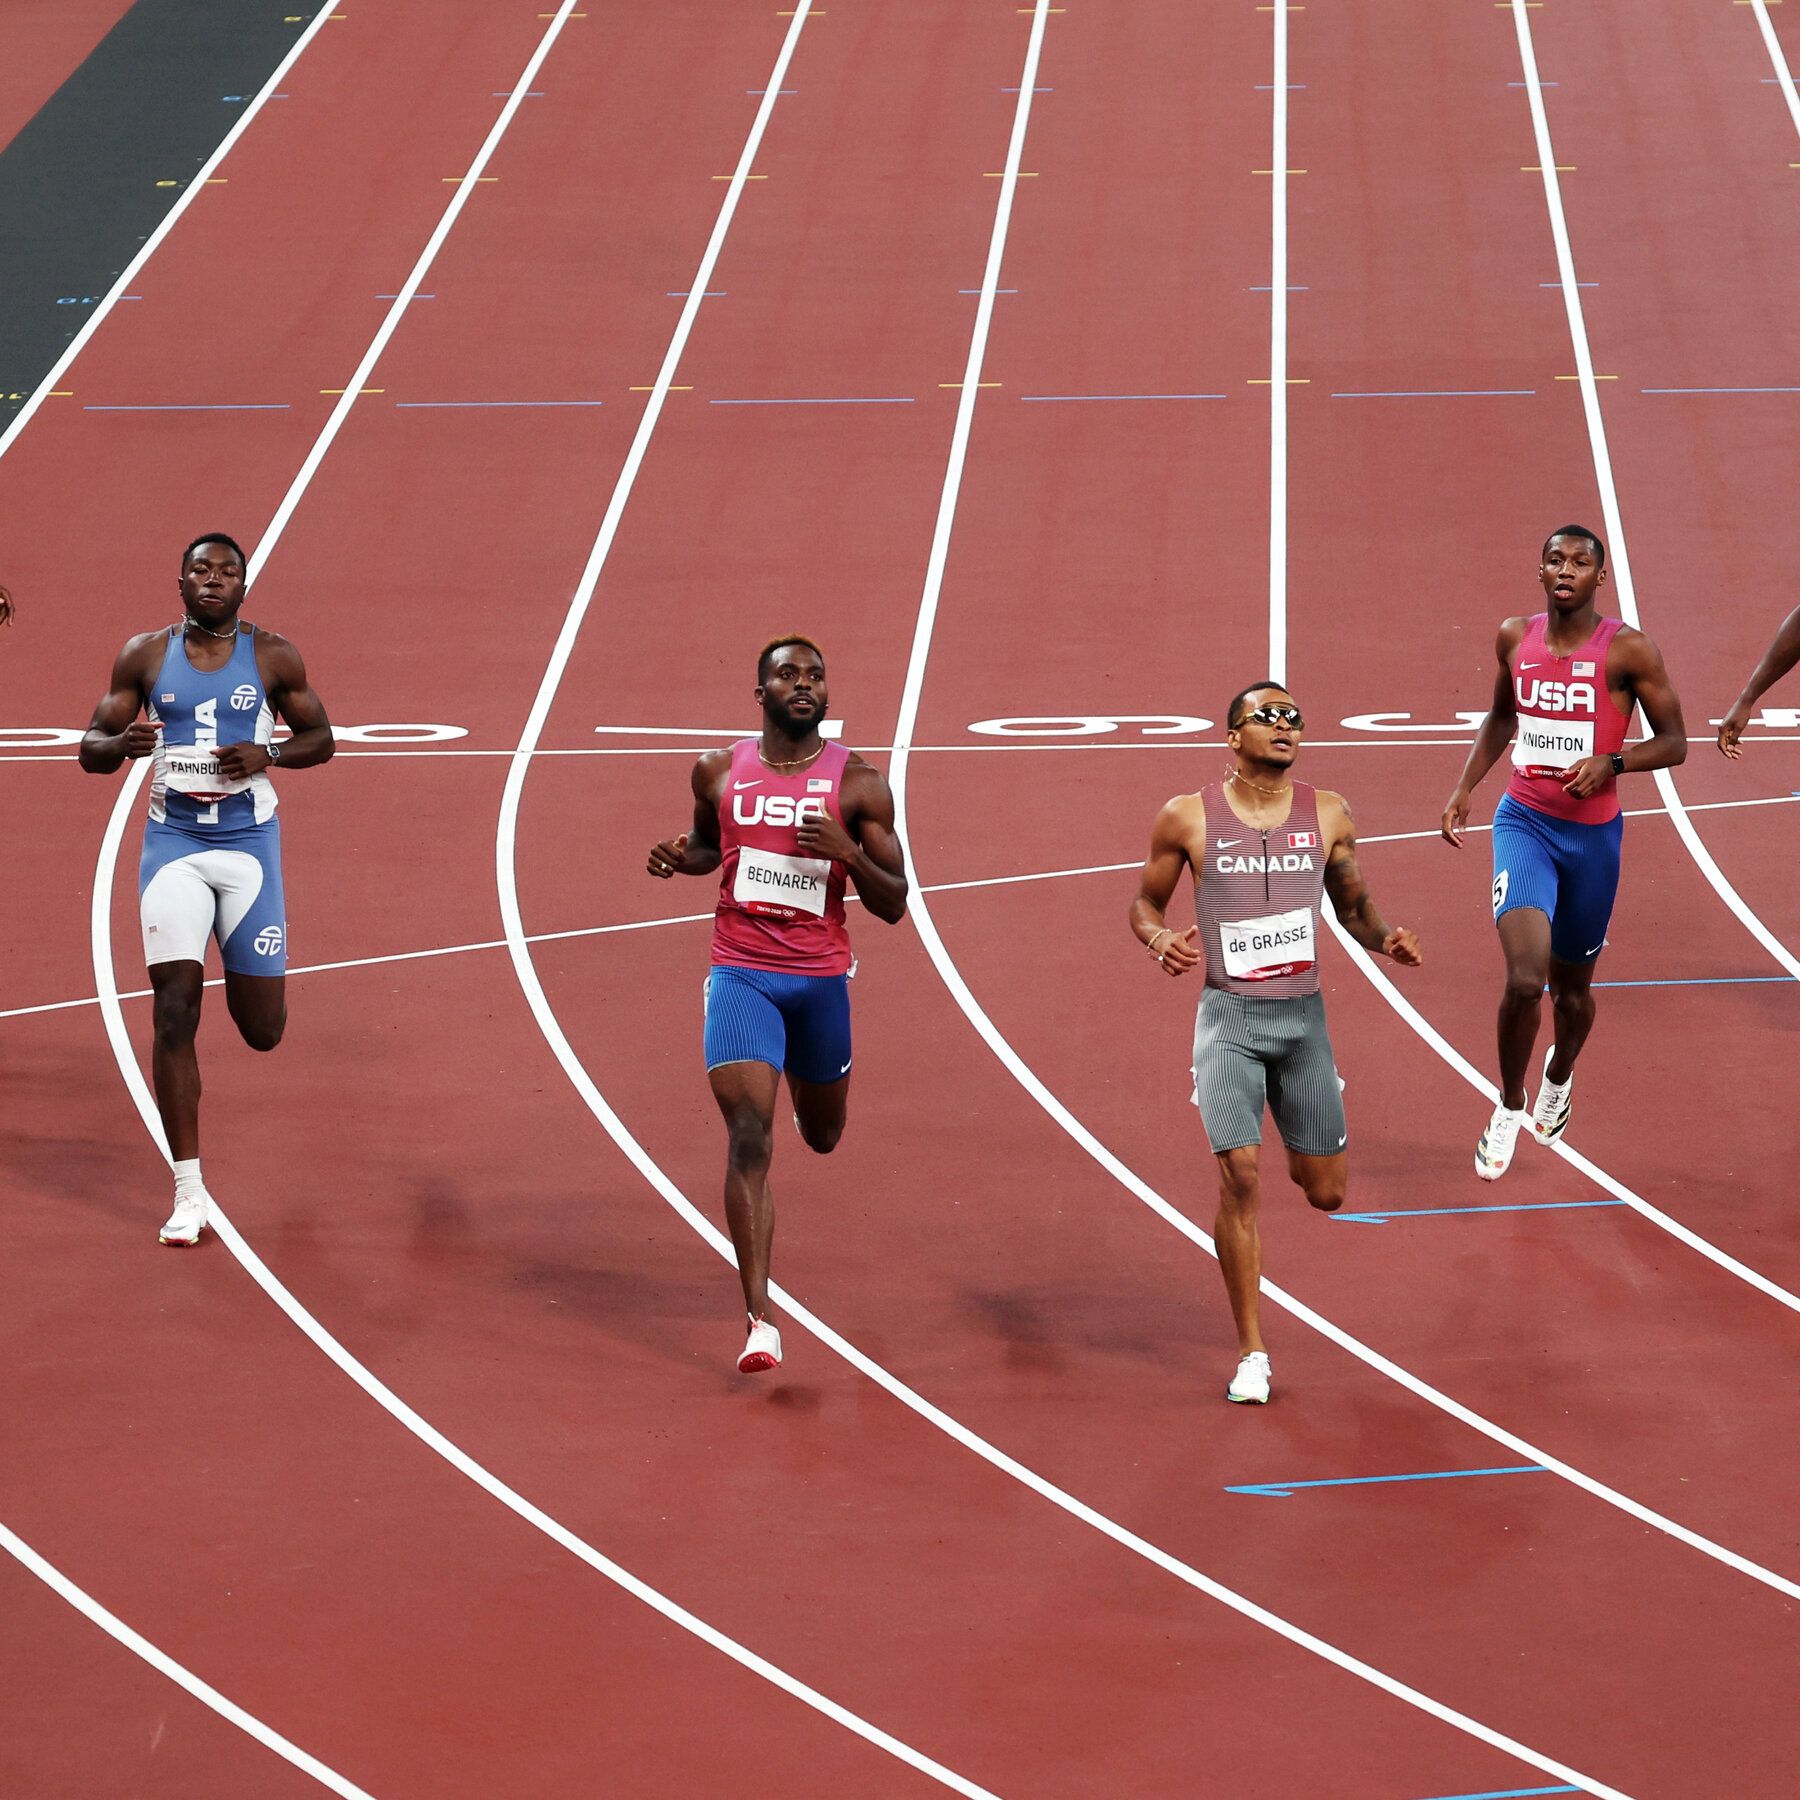 Black Catholics go 1-2 in men's 200m final